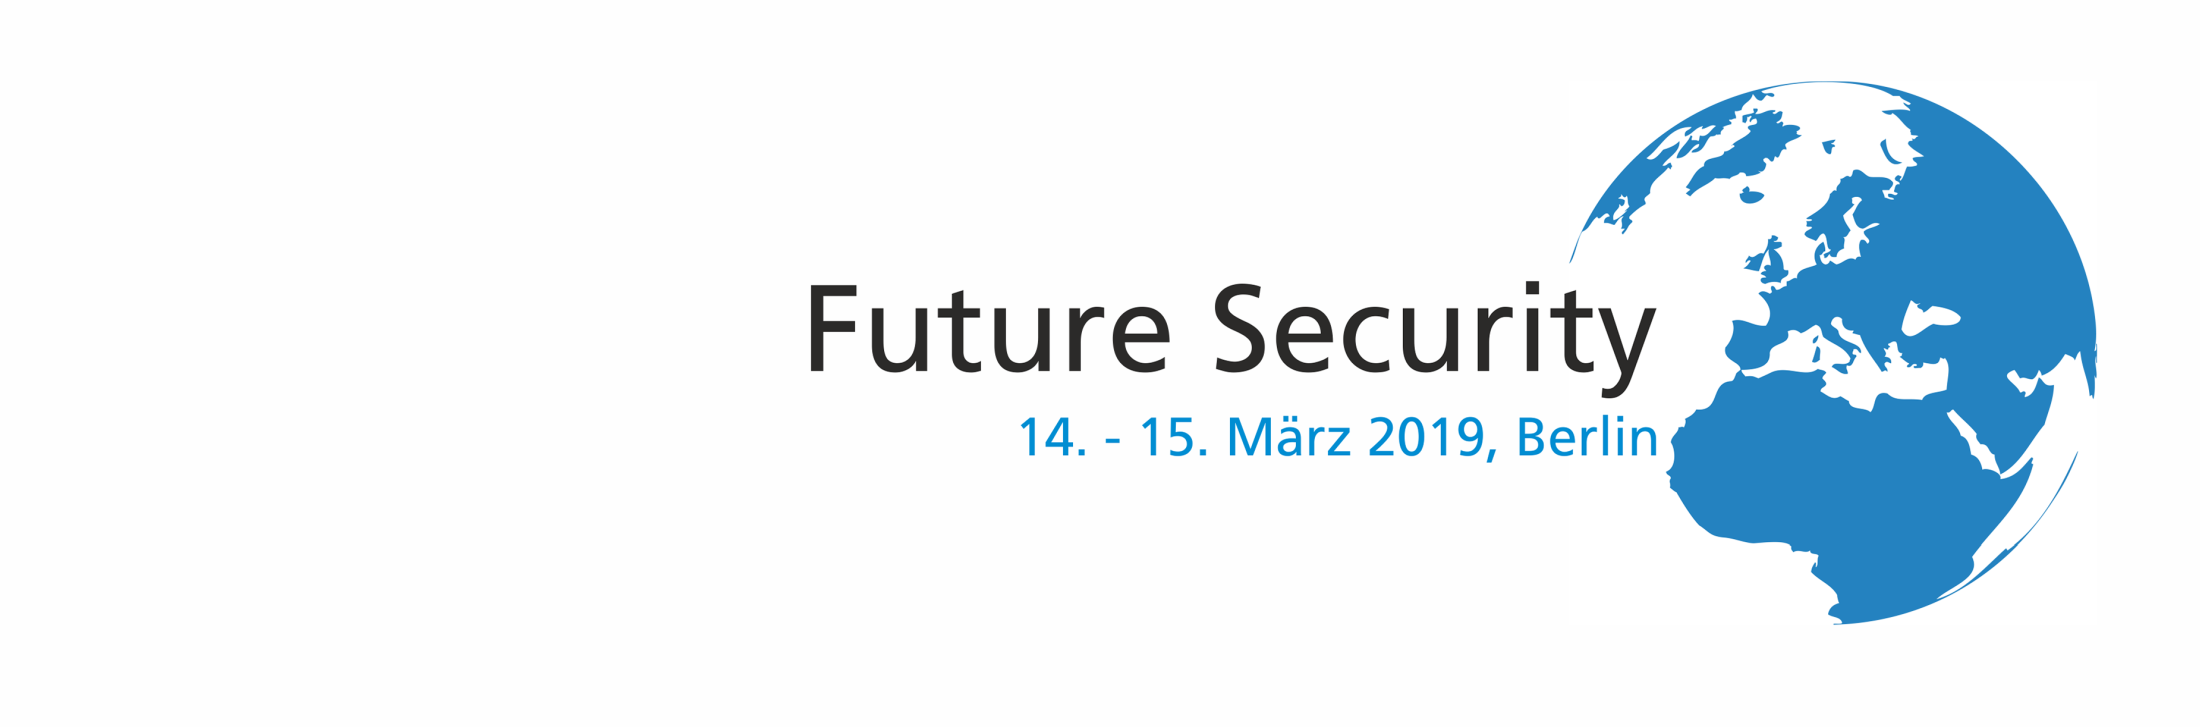 Konferenz Future Security 2019, 14. - 15. März 2019, Berlin